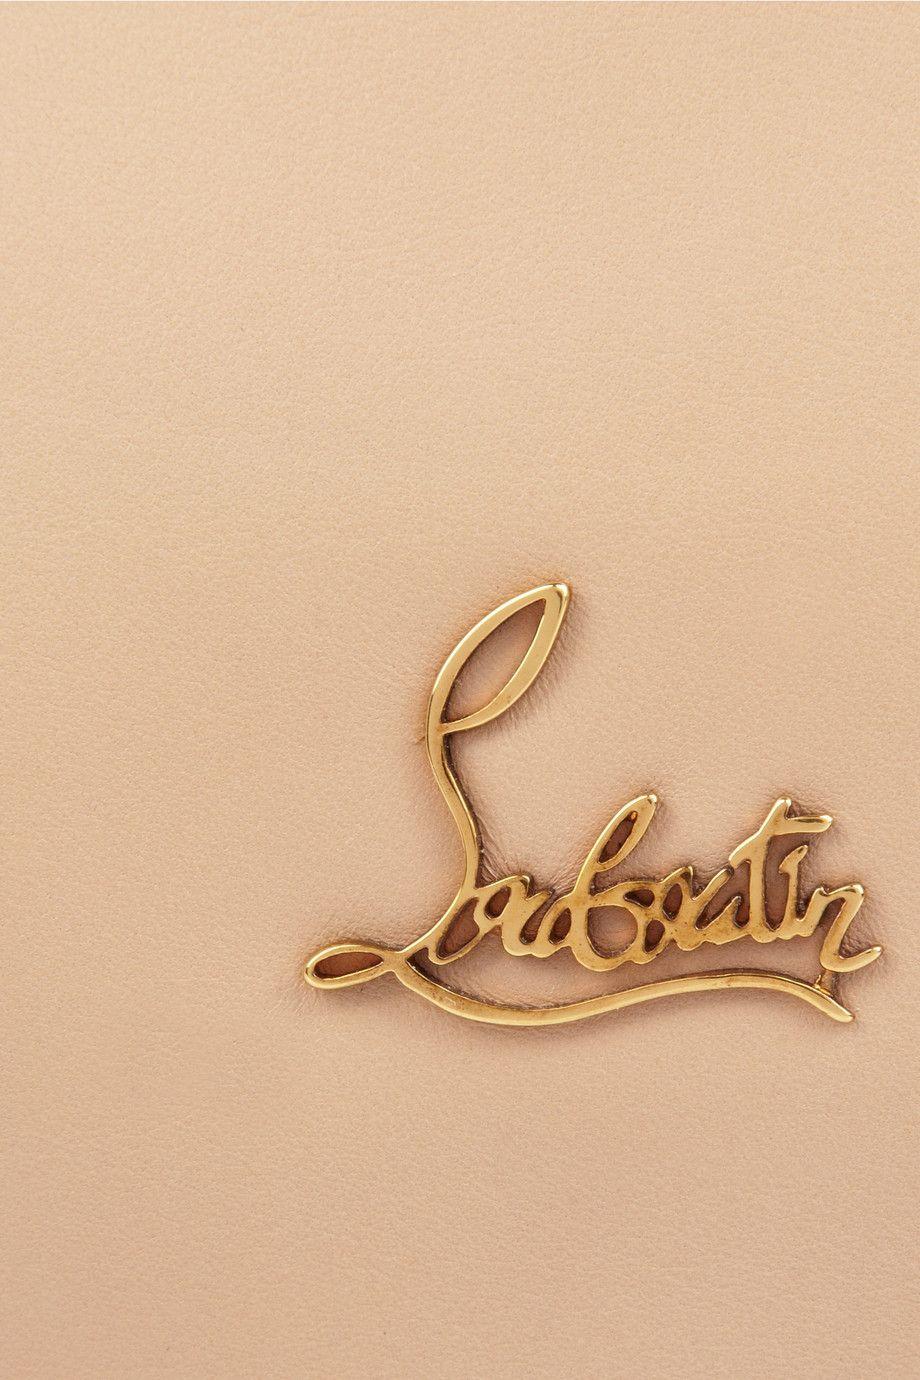 Gold Christian Louboutin Logo - Christian louboutin Logos